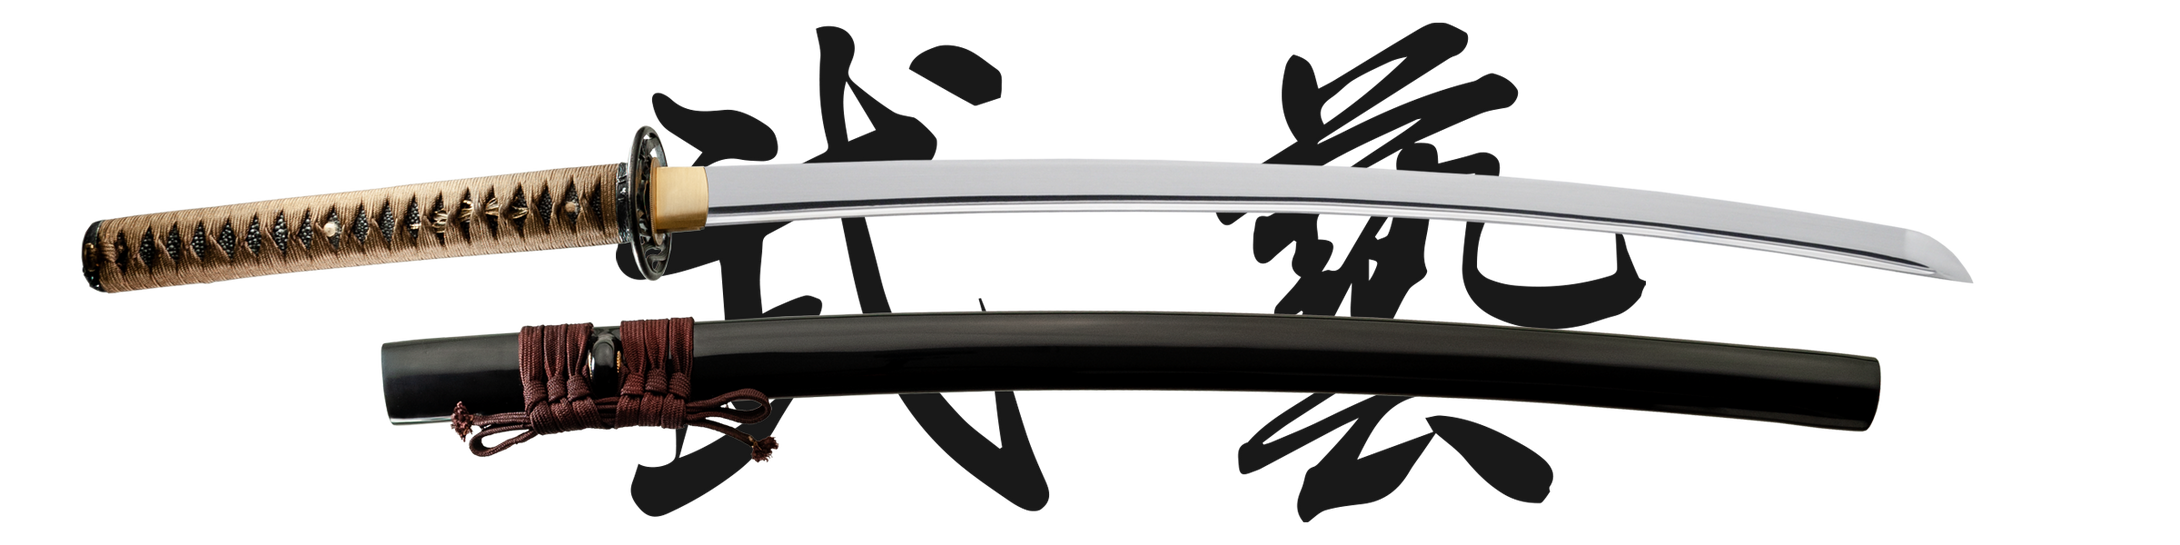 Dragonfly Katana - 5160 Steel Blade